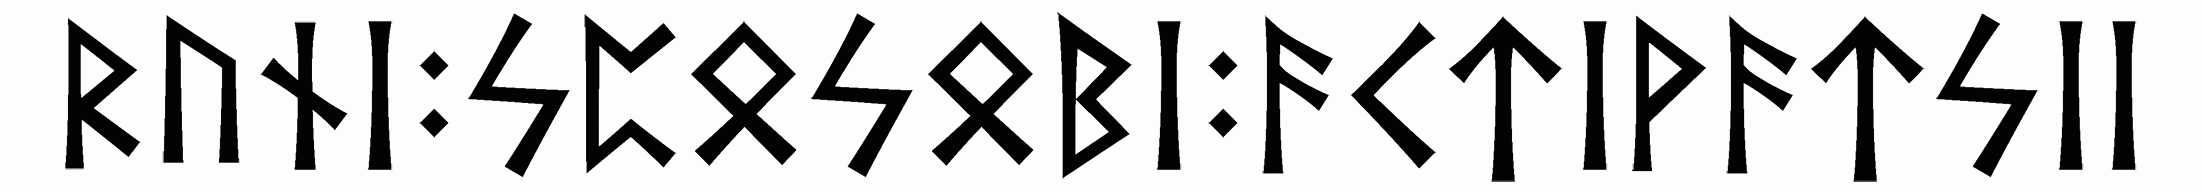 runi+sposobi+aktivatsii - Напиши имя  РУНЫ+СПОСОБЫ+АКТИВАЦИИ рунами  - ᚱᚢᚾᛁ:ᛋᛈᛟᛋᛟᛒᛁ:ᚨᚲᛏᛁᚹᚨᛏᛋᛁᛁ - Значение и характер имени  РУНЫ+СПОСОБЫ+АКТИВАЦИИ - 